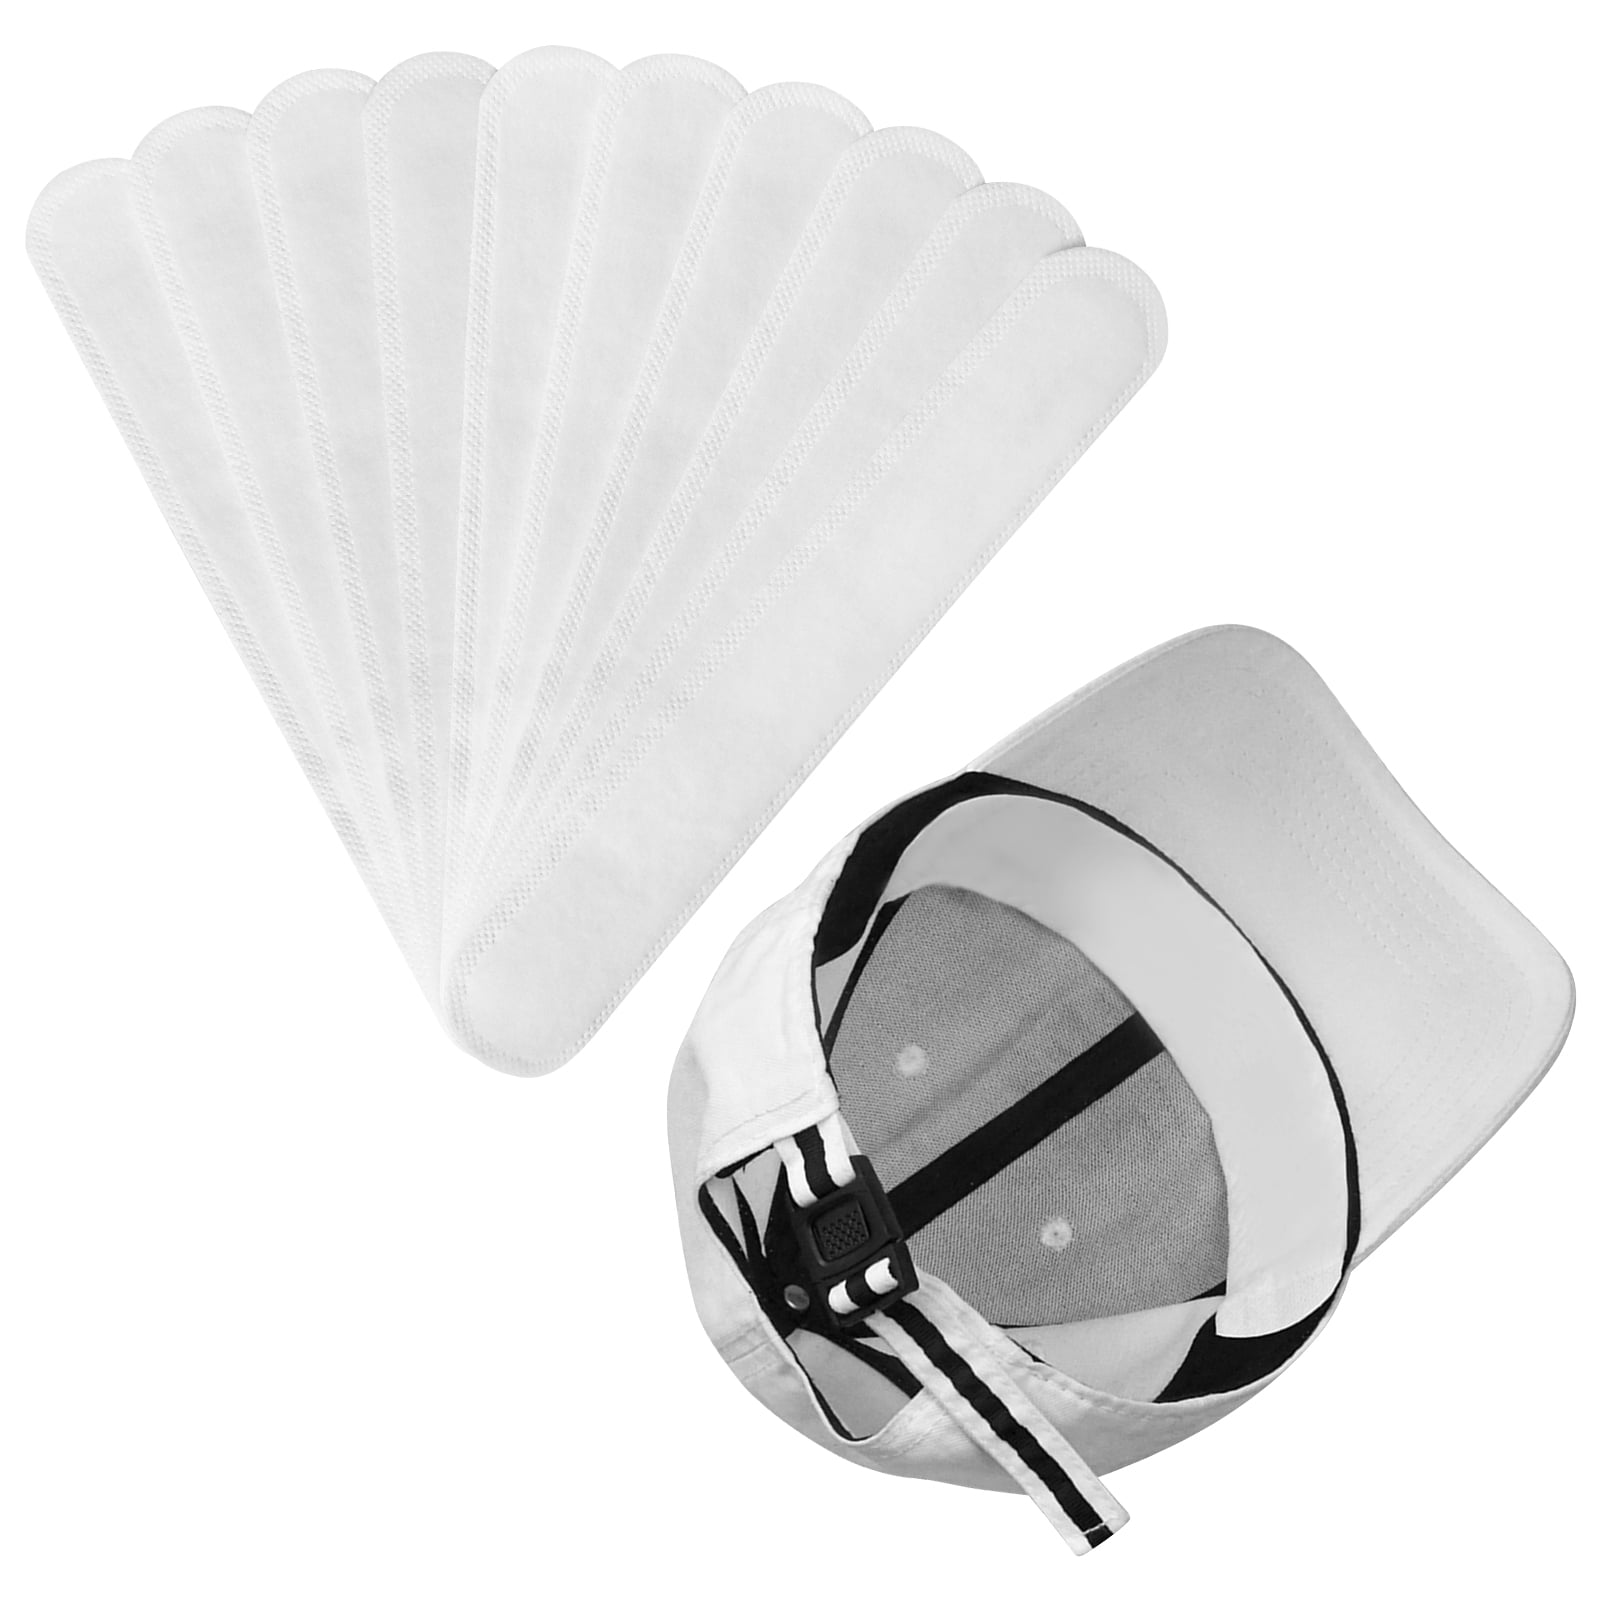 60Pcs 9 Golf Hat Sweat Liner Disposable Cap Sweat Guard Liner White